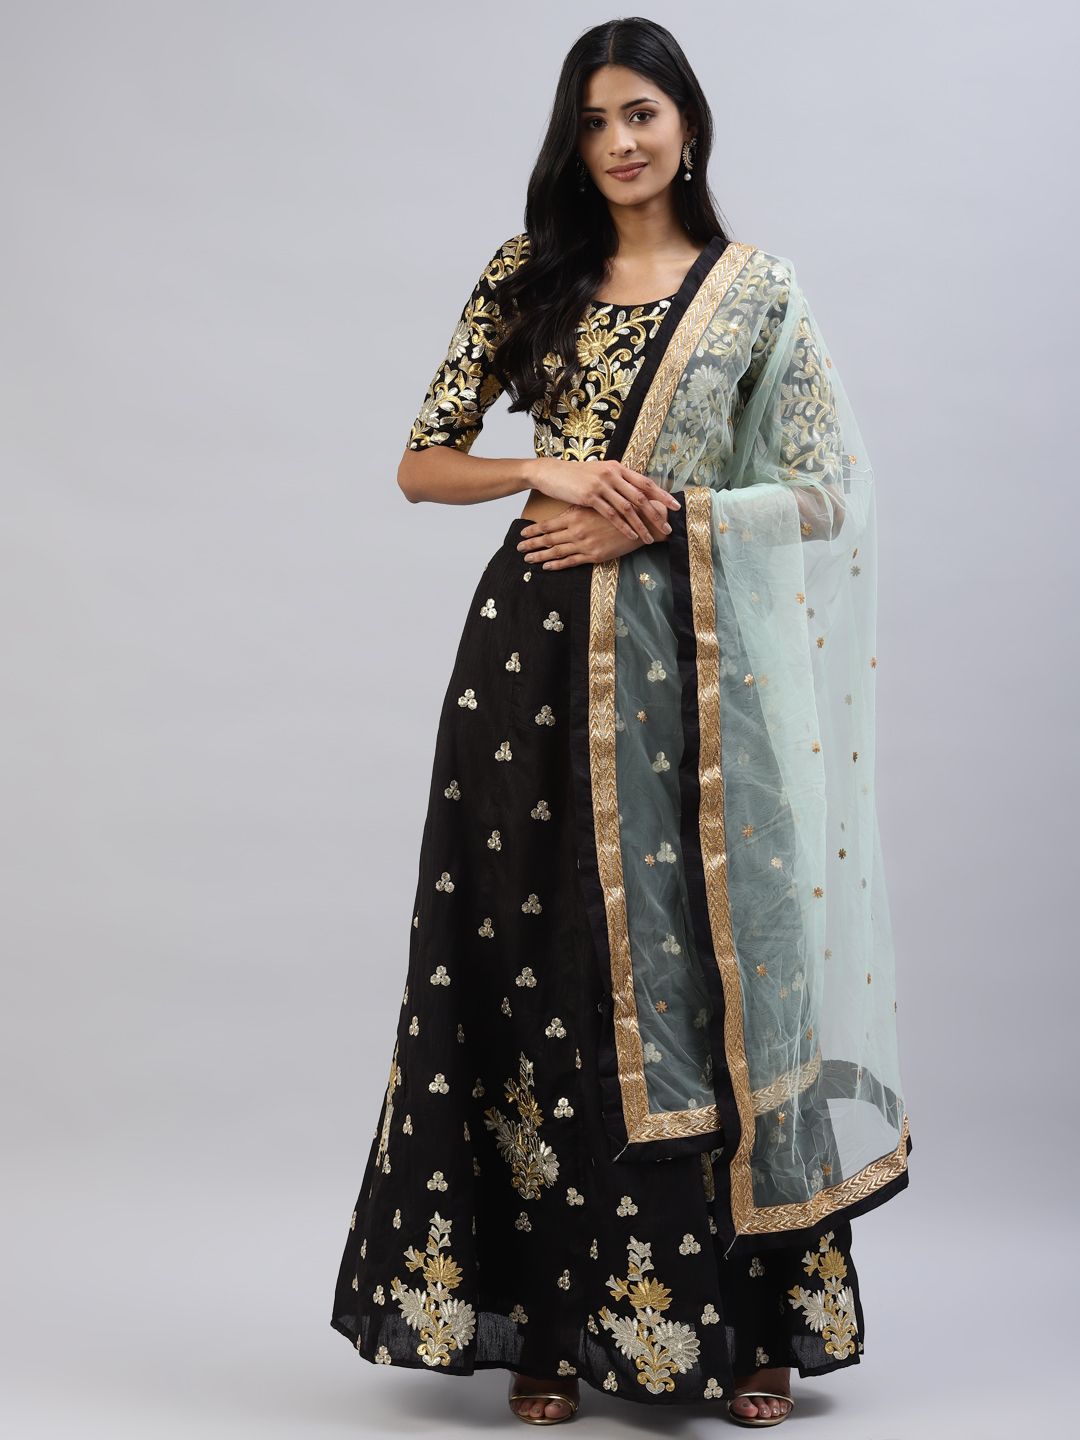 Readiprint Fashions Women Black & Green Embroidered Lehenga & Choli With Dupatta Price in India